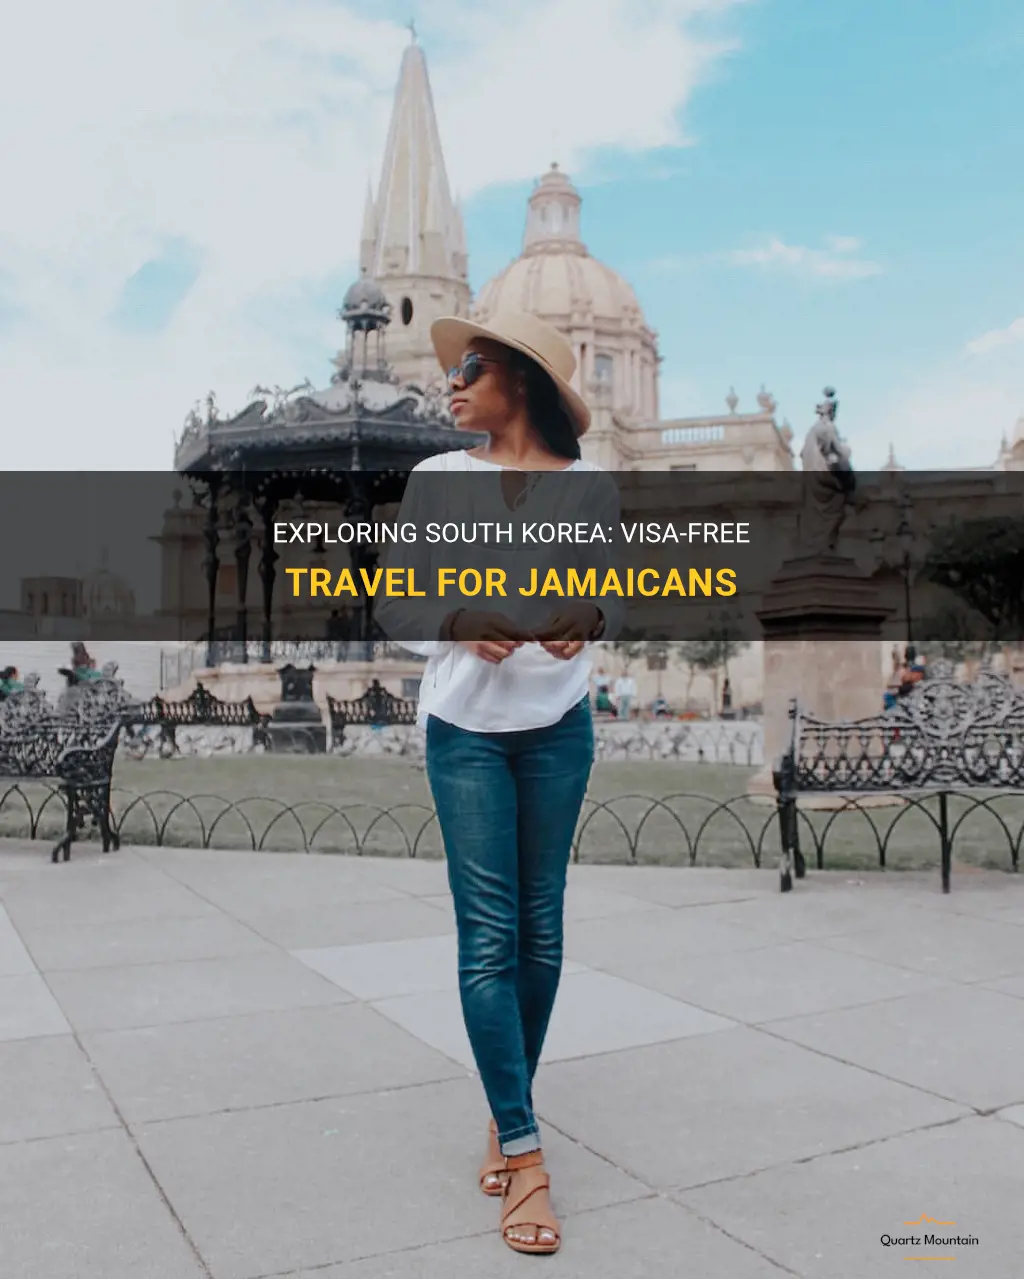 can jamaica travel to south korea visa free